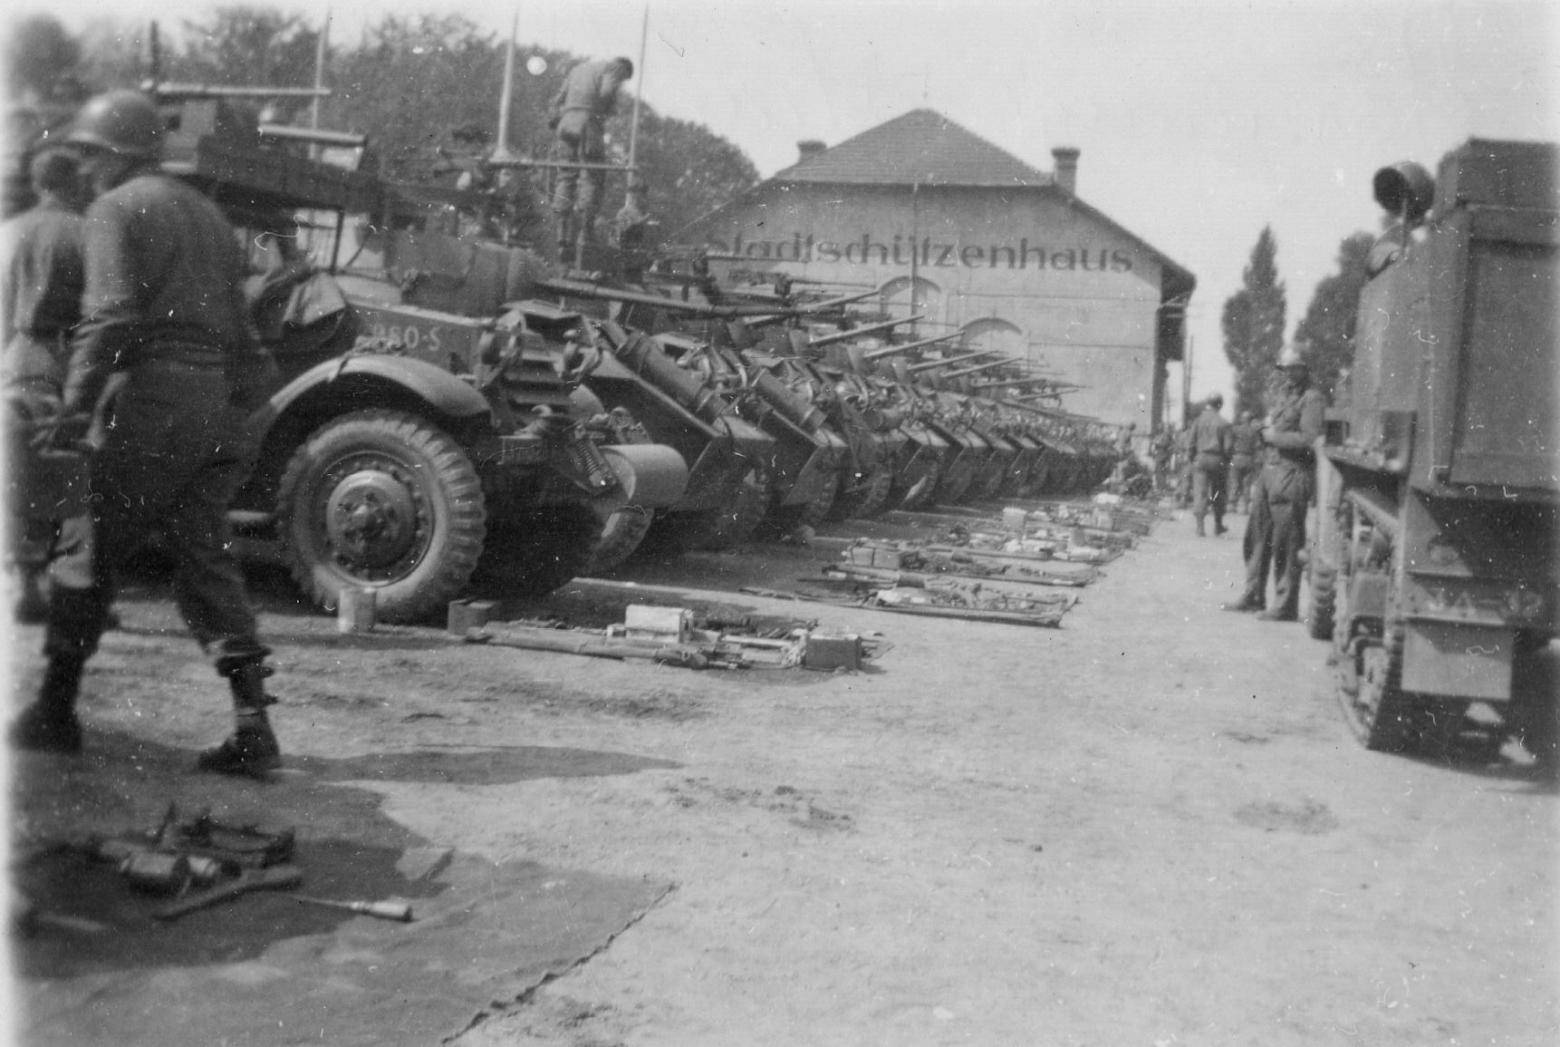 Schützenhausplatz Mücheln April 1945